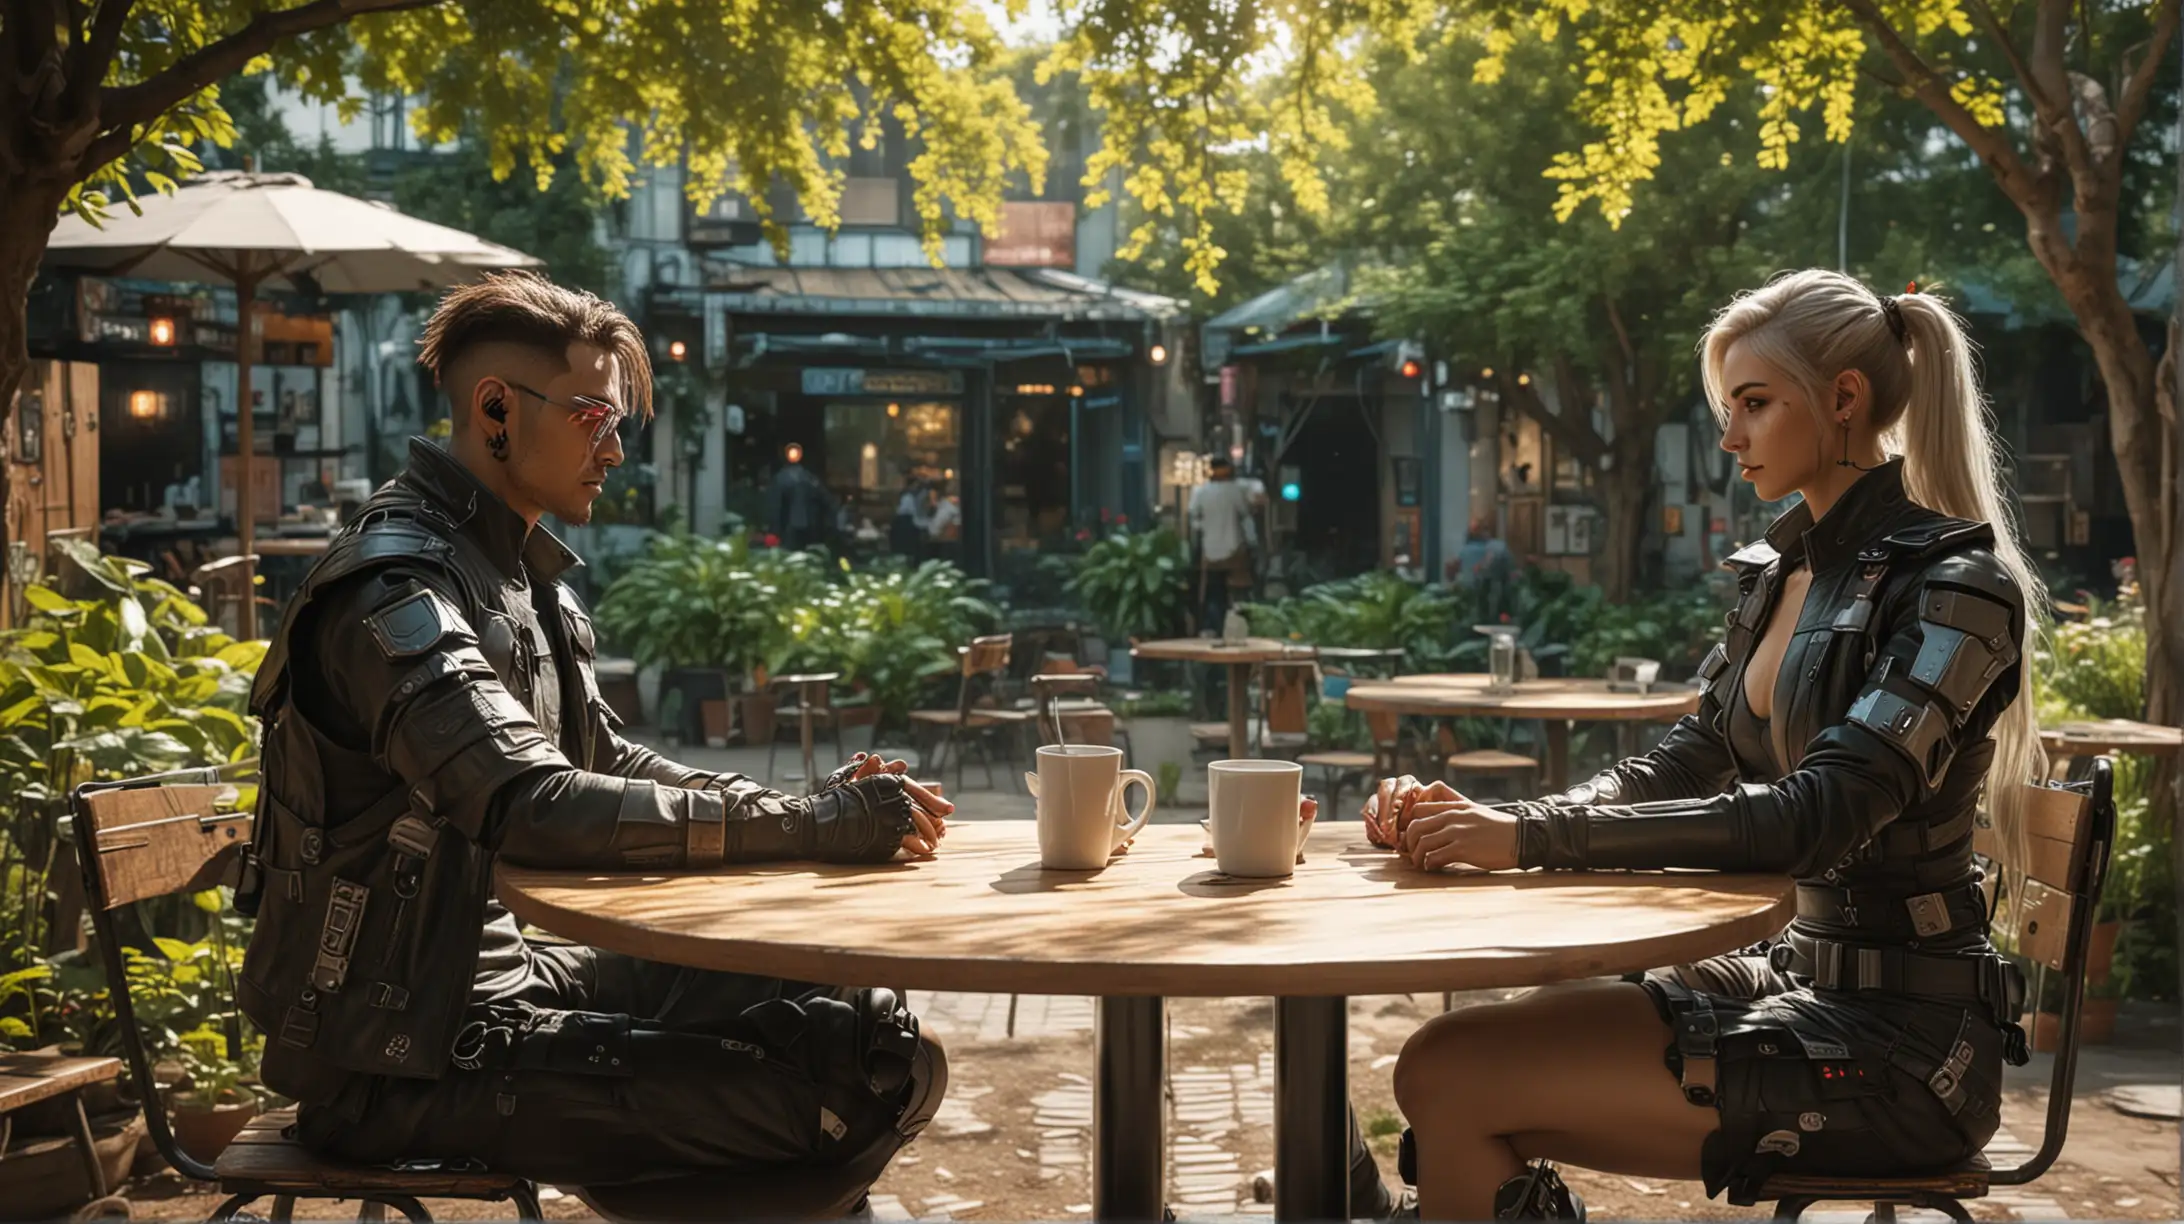 Cyberpunk Couple Enjoying Coffee in Sunny Garden